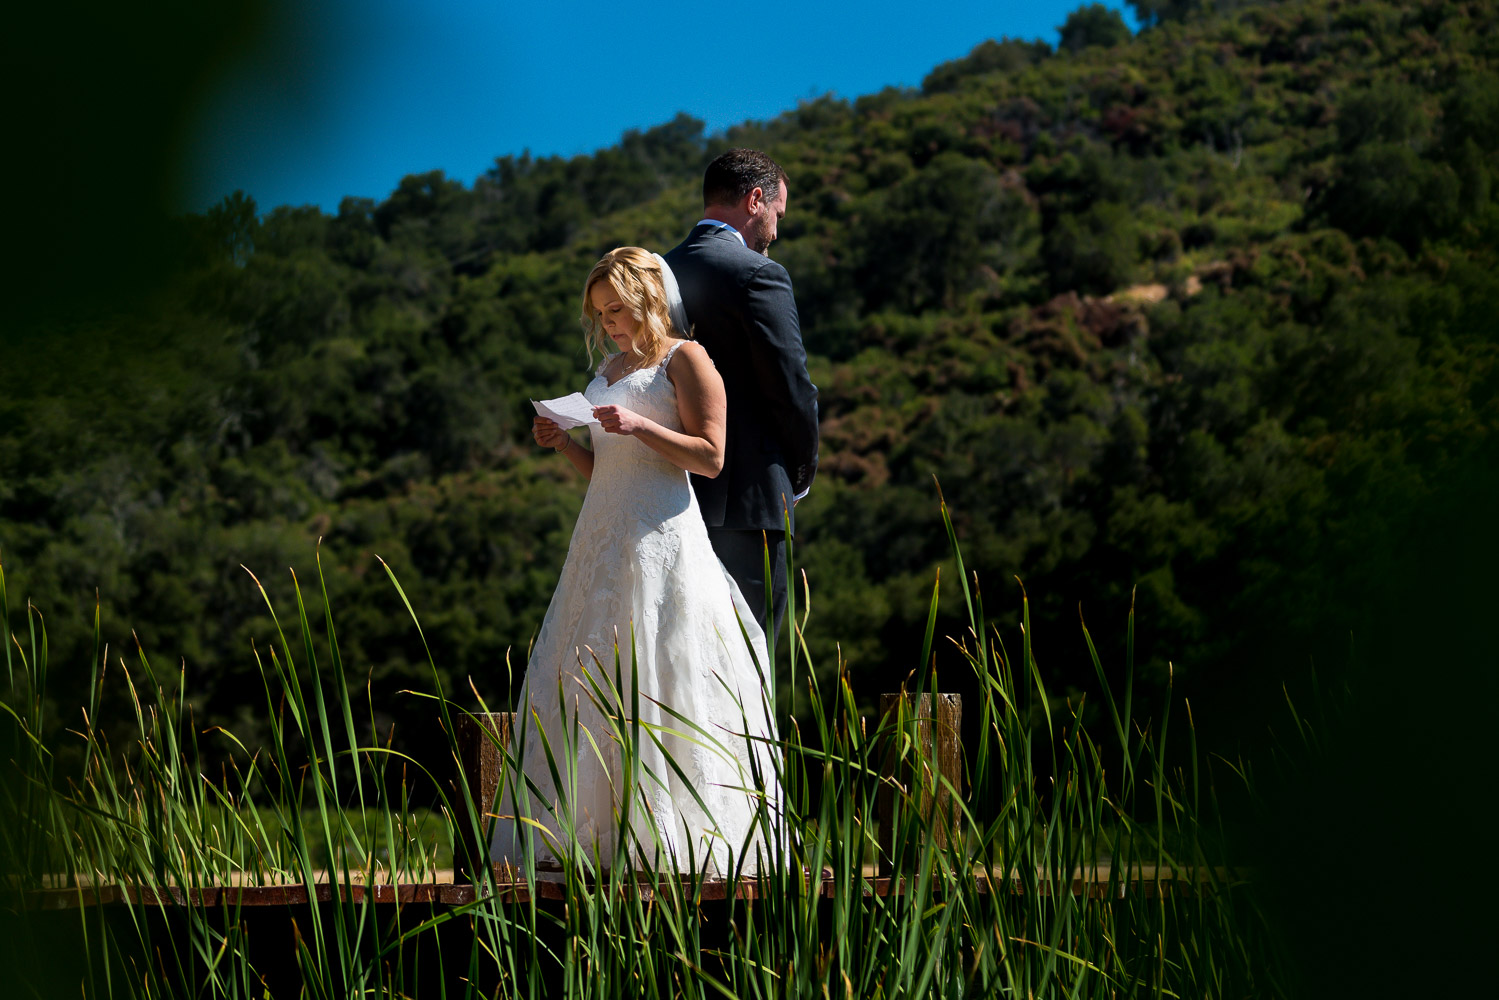 Halter Ranch Wedding Vow Exchange over pond